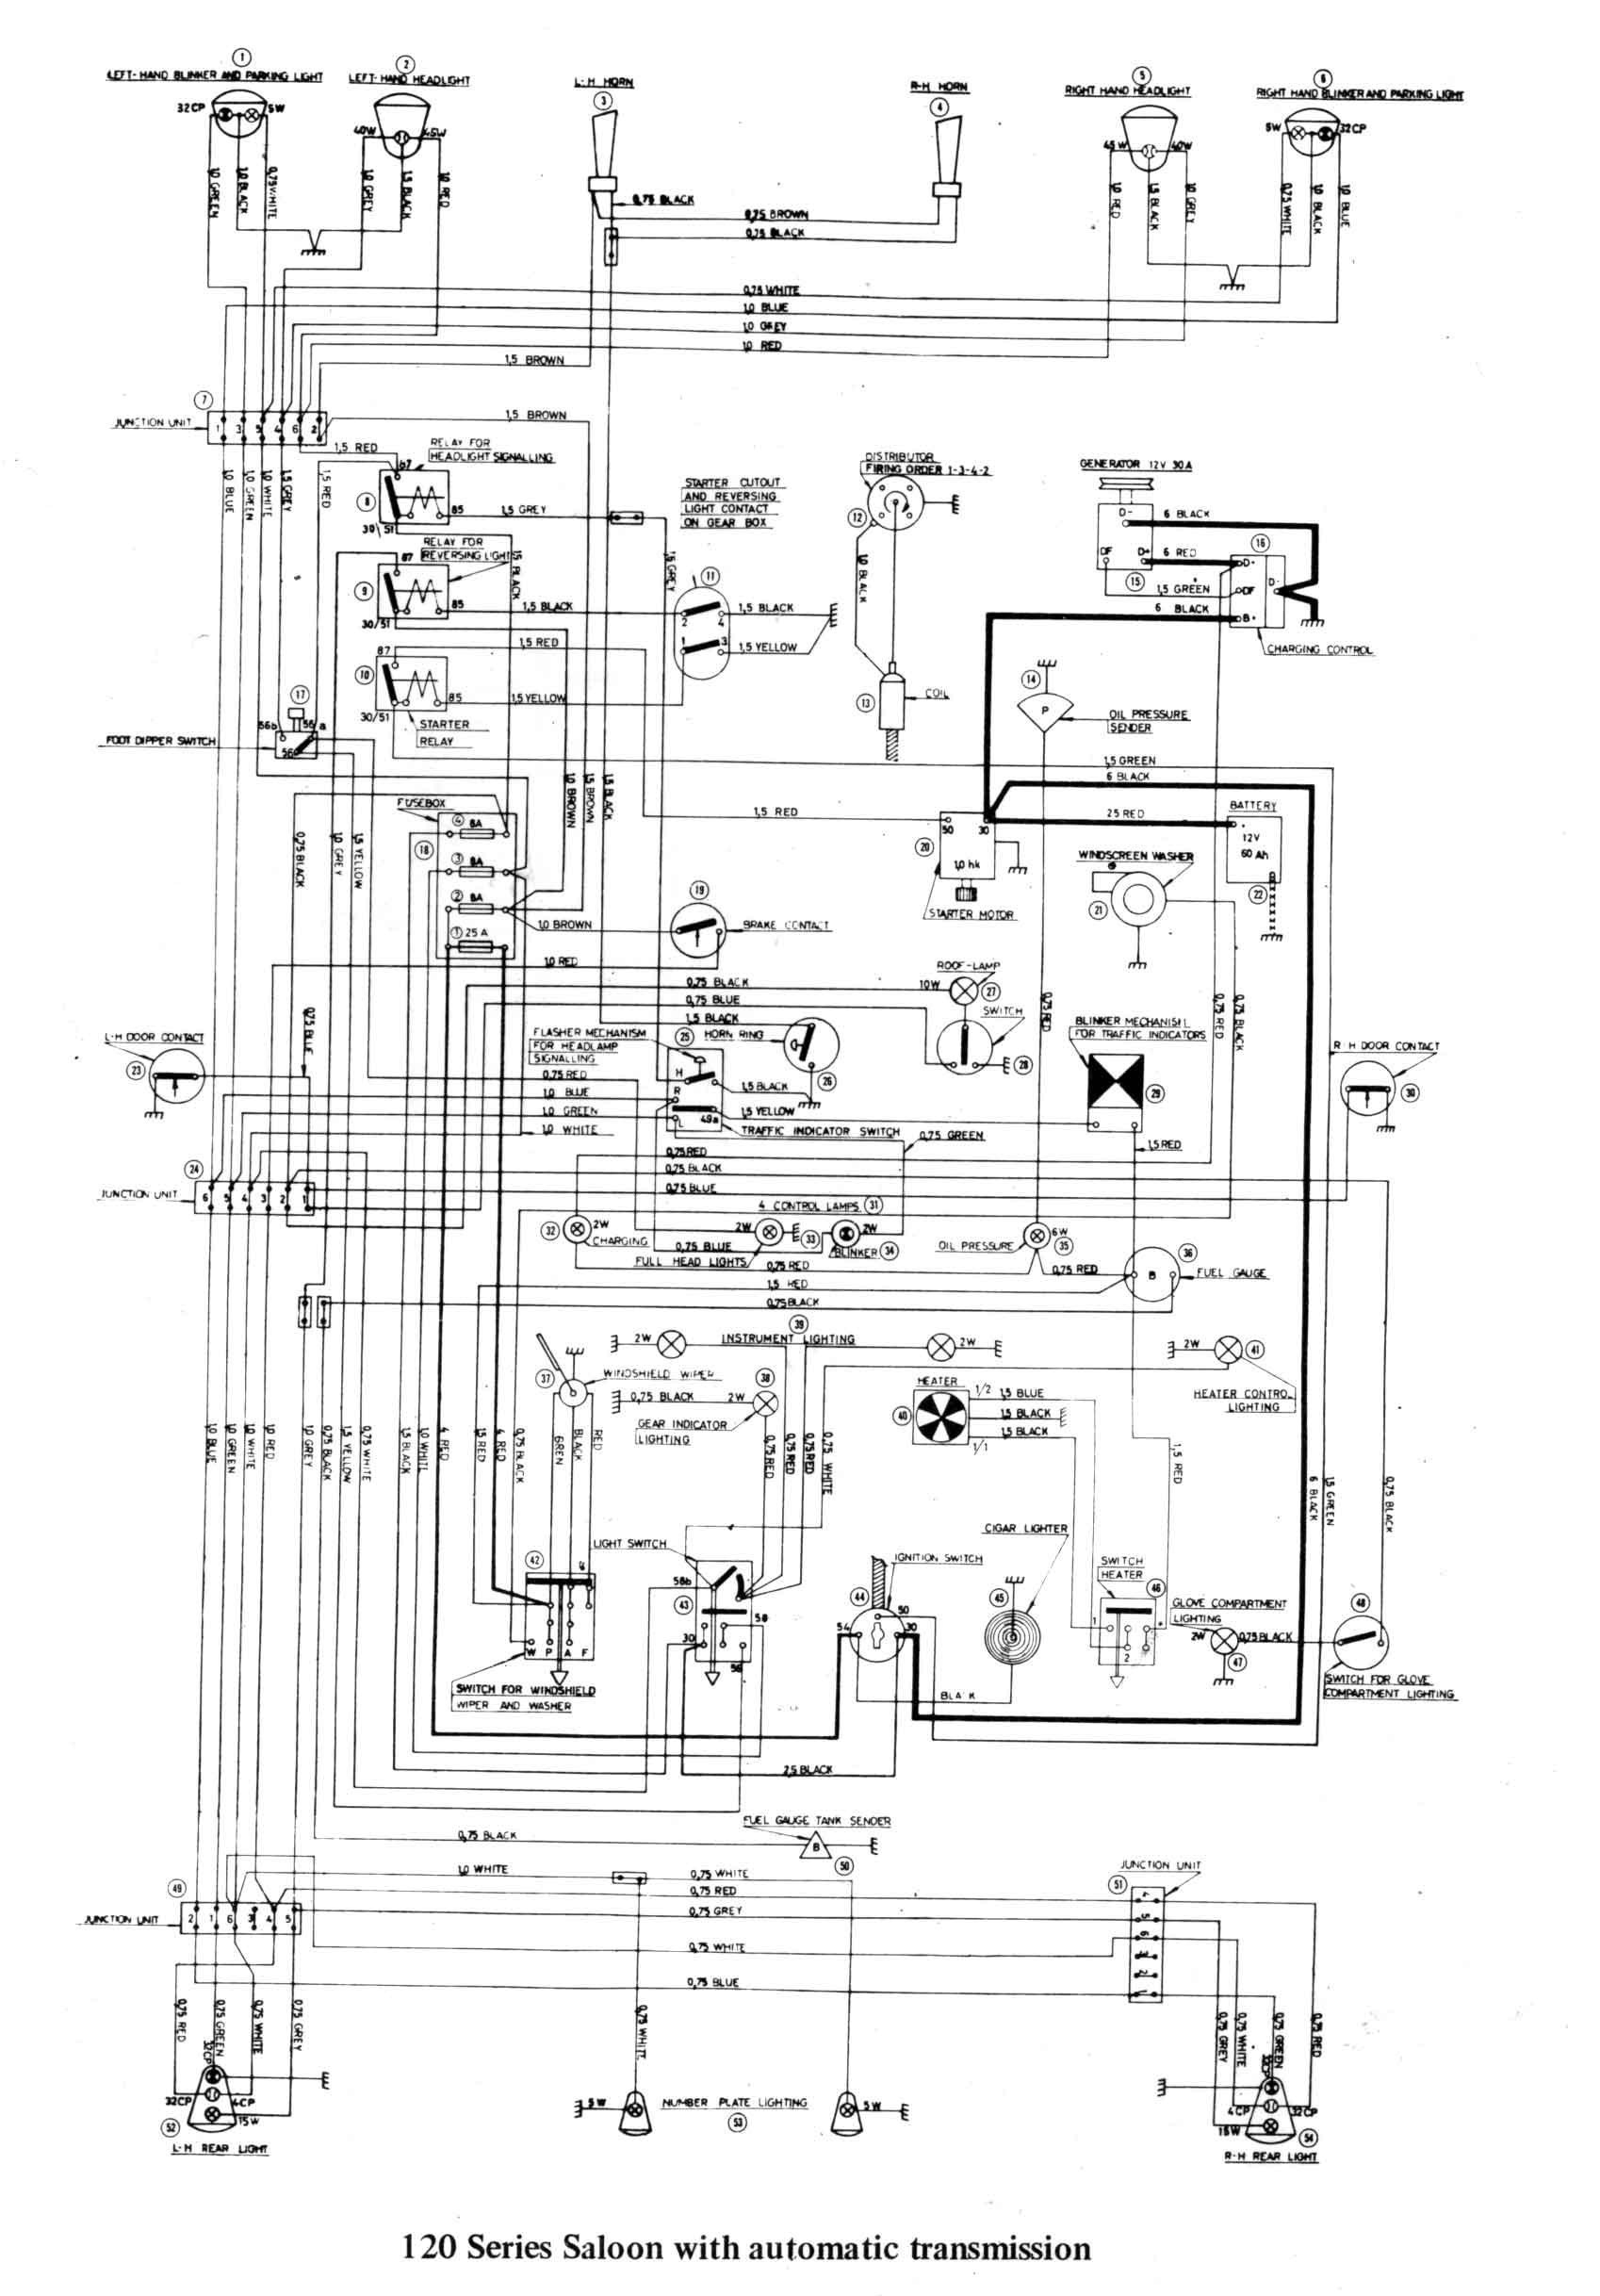 Wiring Diagram Manual Simple Turn Signal Wiring Diagram Lovely Jcb 3 0d 4—4 3 5d 4—4 Teletruk